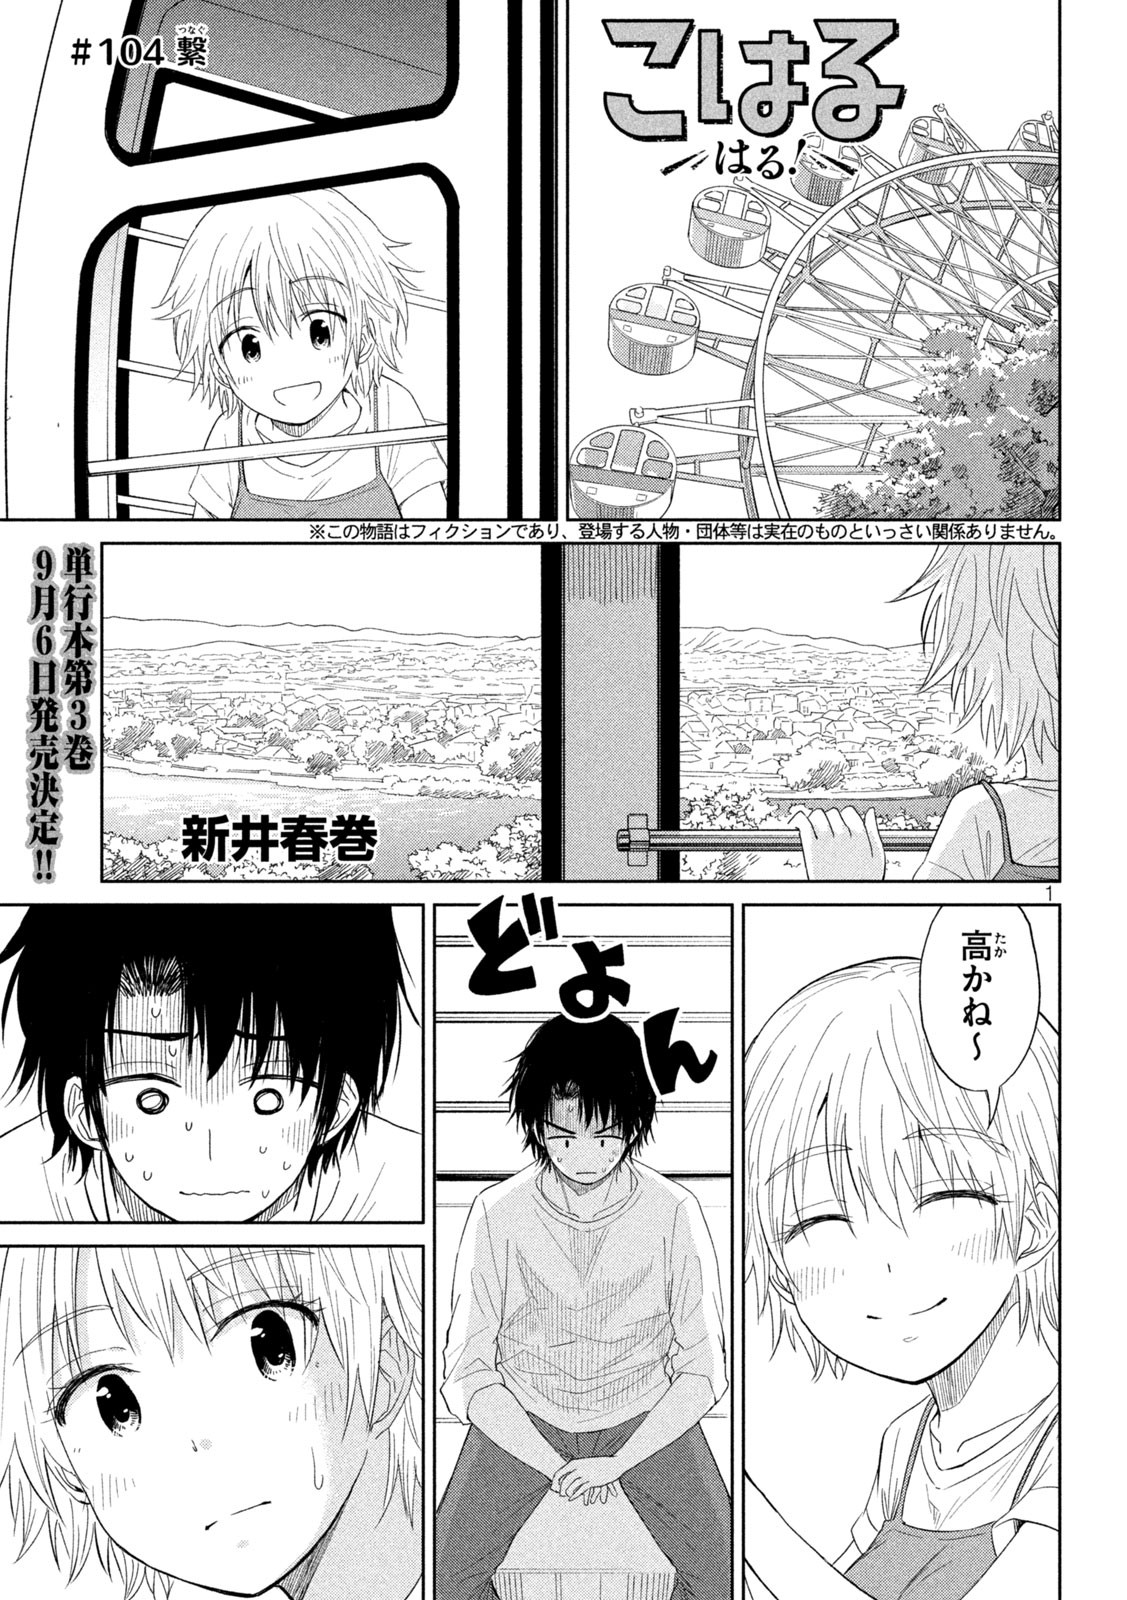 Koharu haru! - Chapter 104 - Page 1